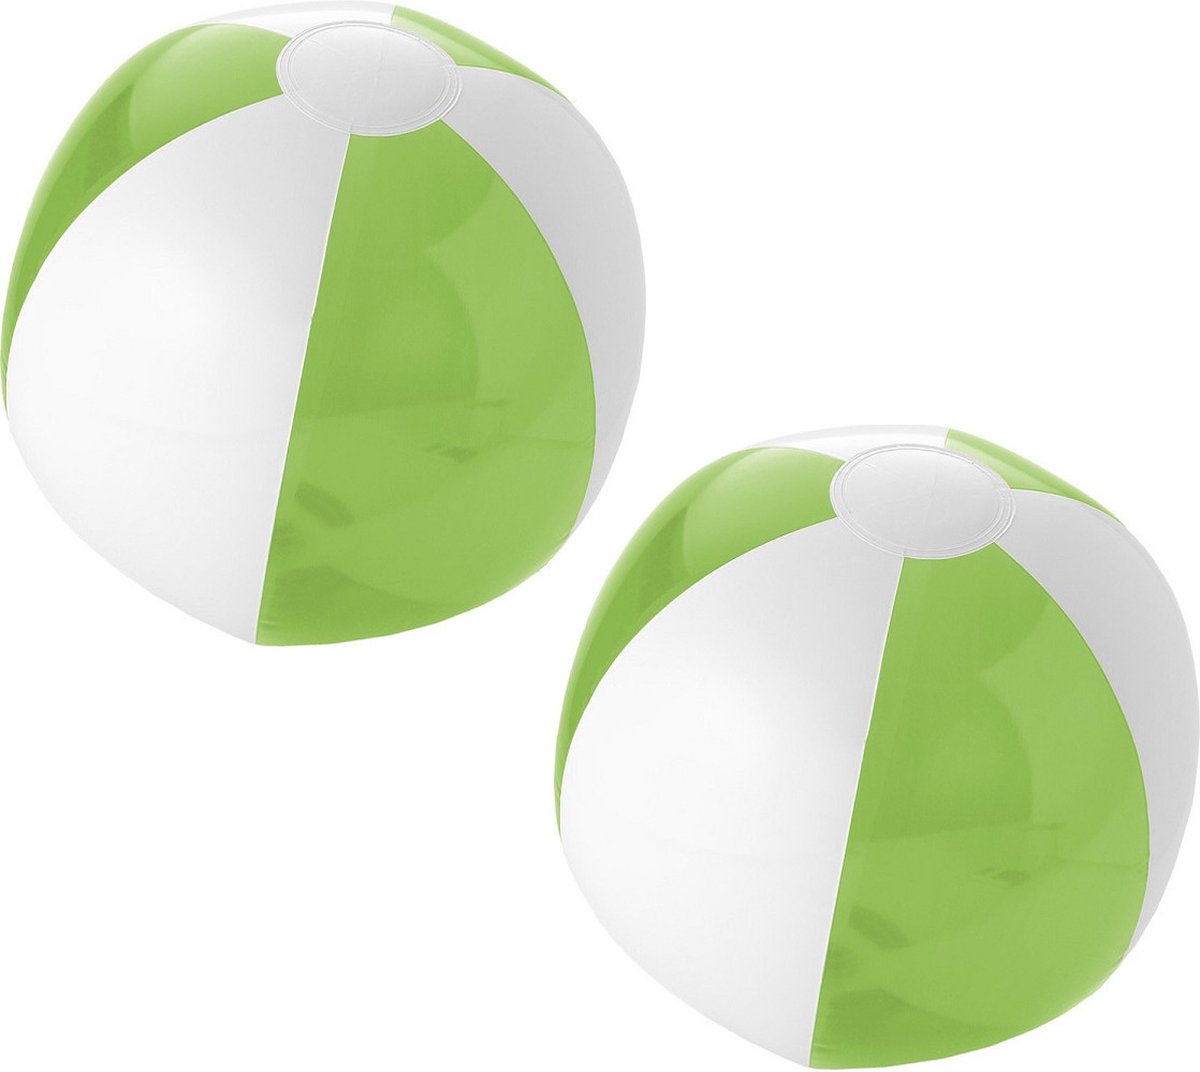 2x stuks opblaasbare strandballen groen/wit 30 cm - Buitenspeelgoed waterspeelgoed opblaasbaar